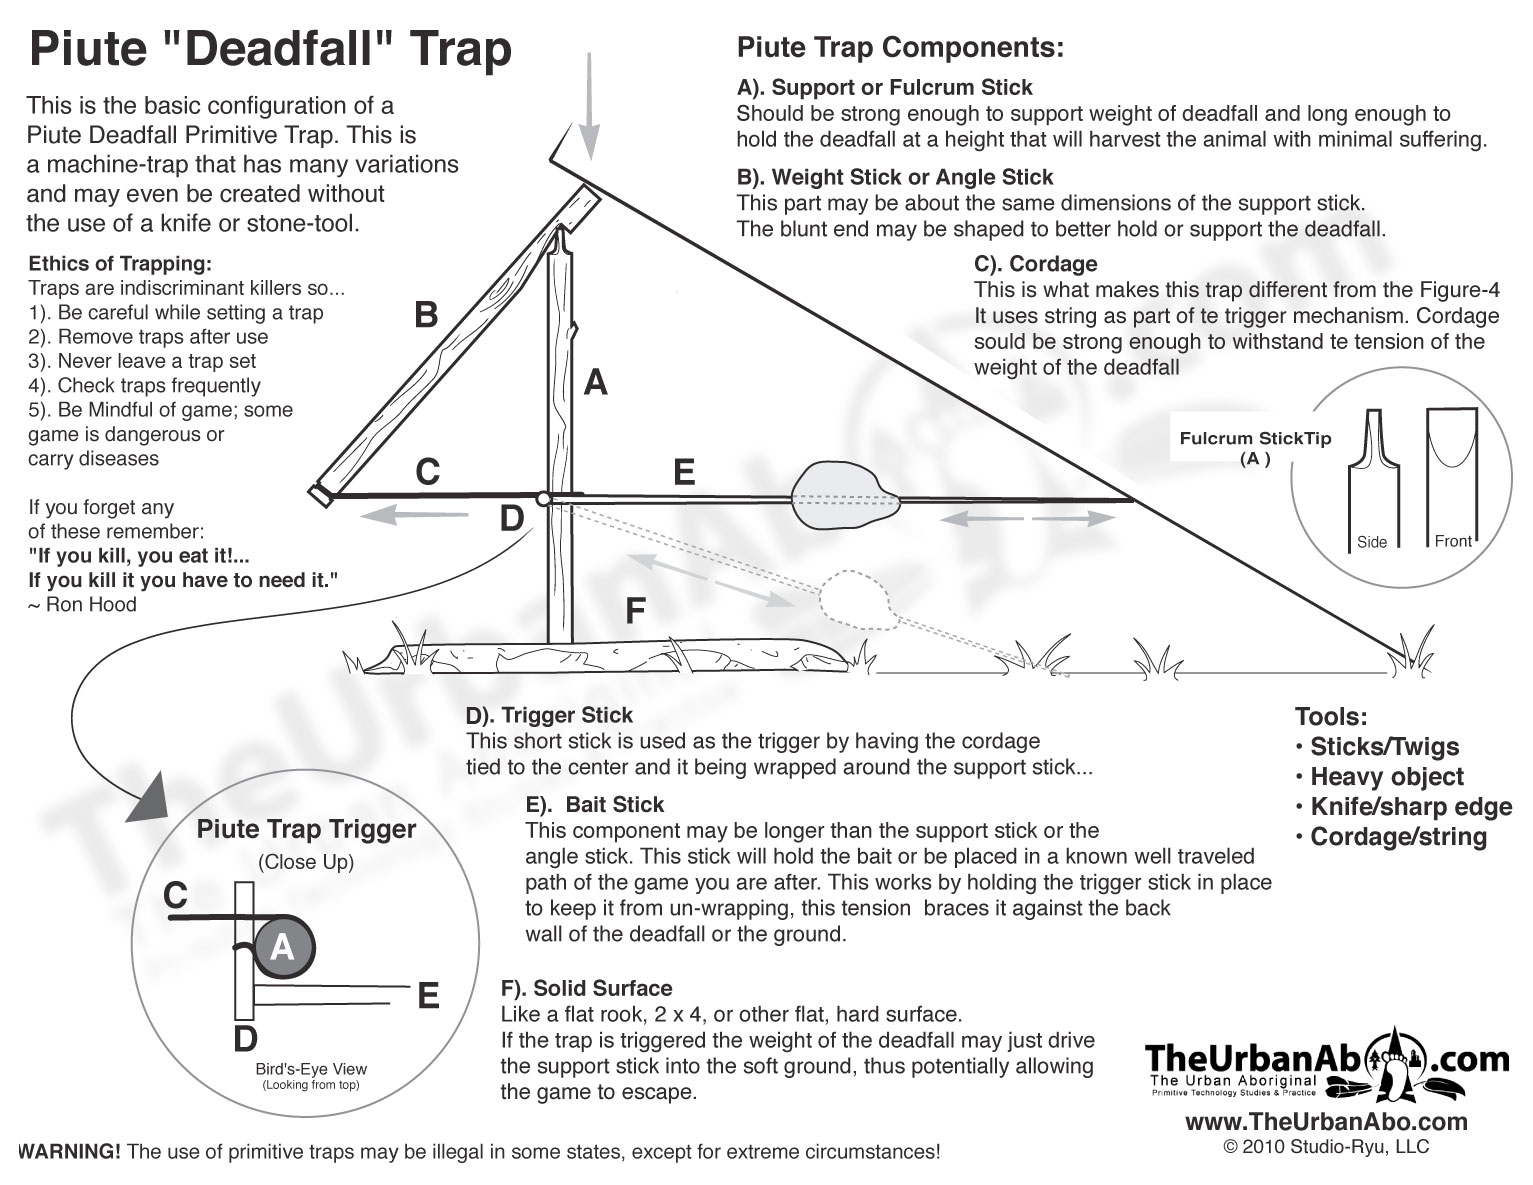 paiute deadfall trap diagram